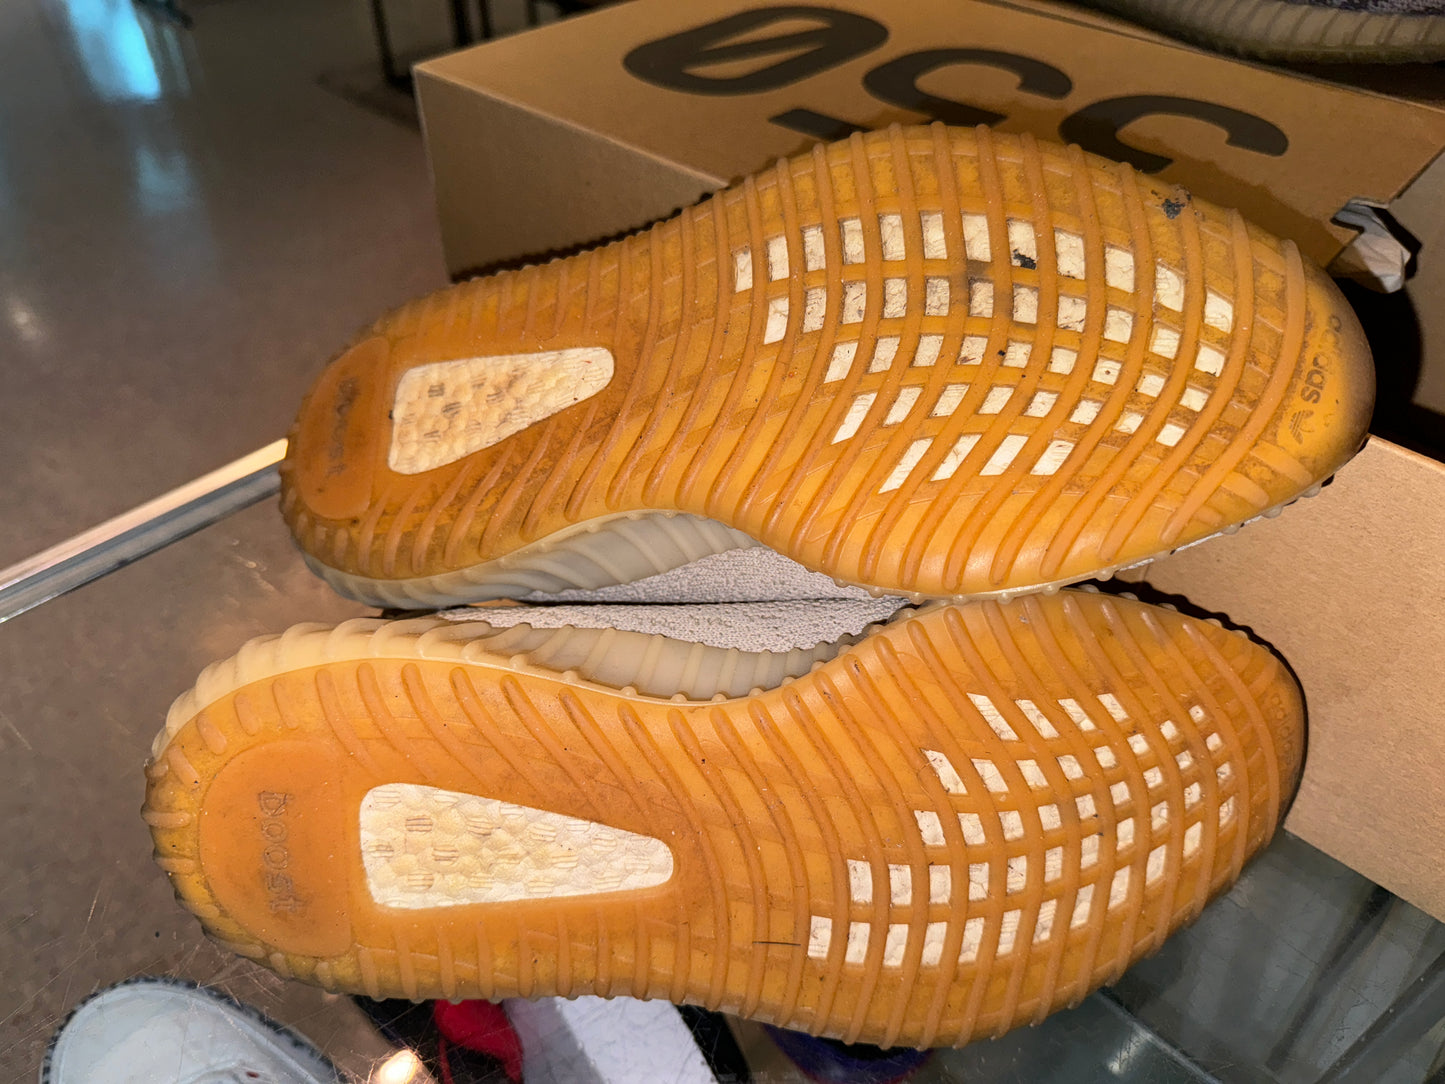 Size 9 Adidas Yeezy Boost 350 v2 “Sesame” (Mall)